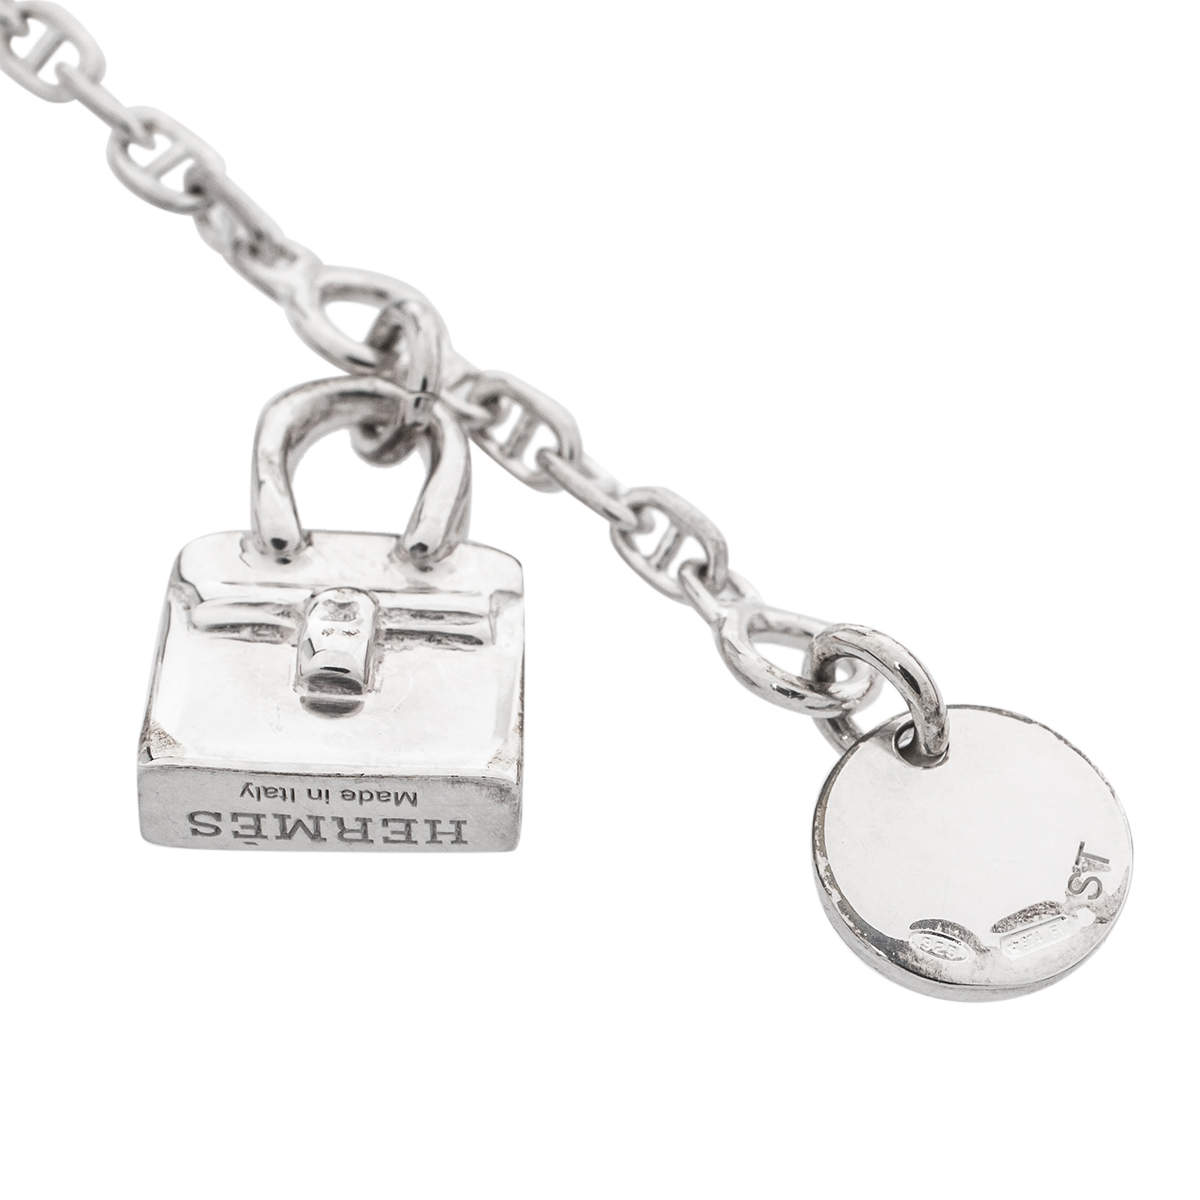 Hermès Mini Birkin Amulette Sterling Silver Bracelet ST Hermes